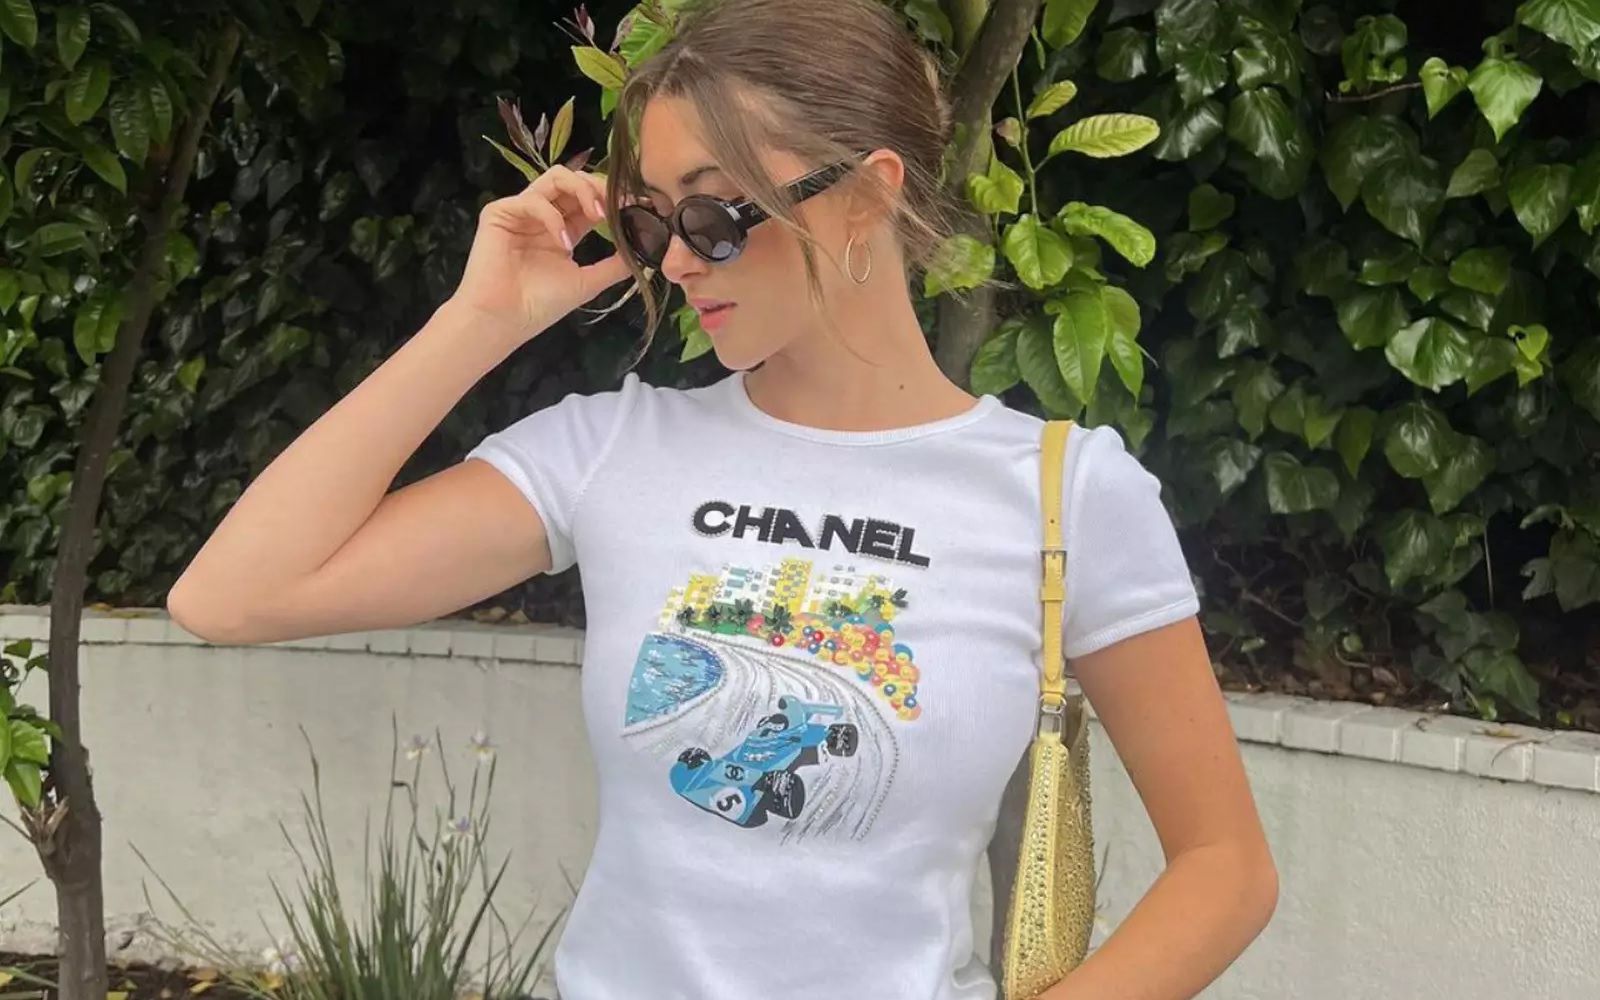 Chanel's Formula 1 tee trends on TikTok while Atelier Jolie takes fashion  headlines